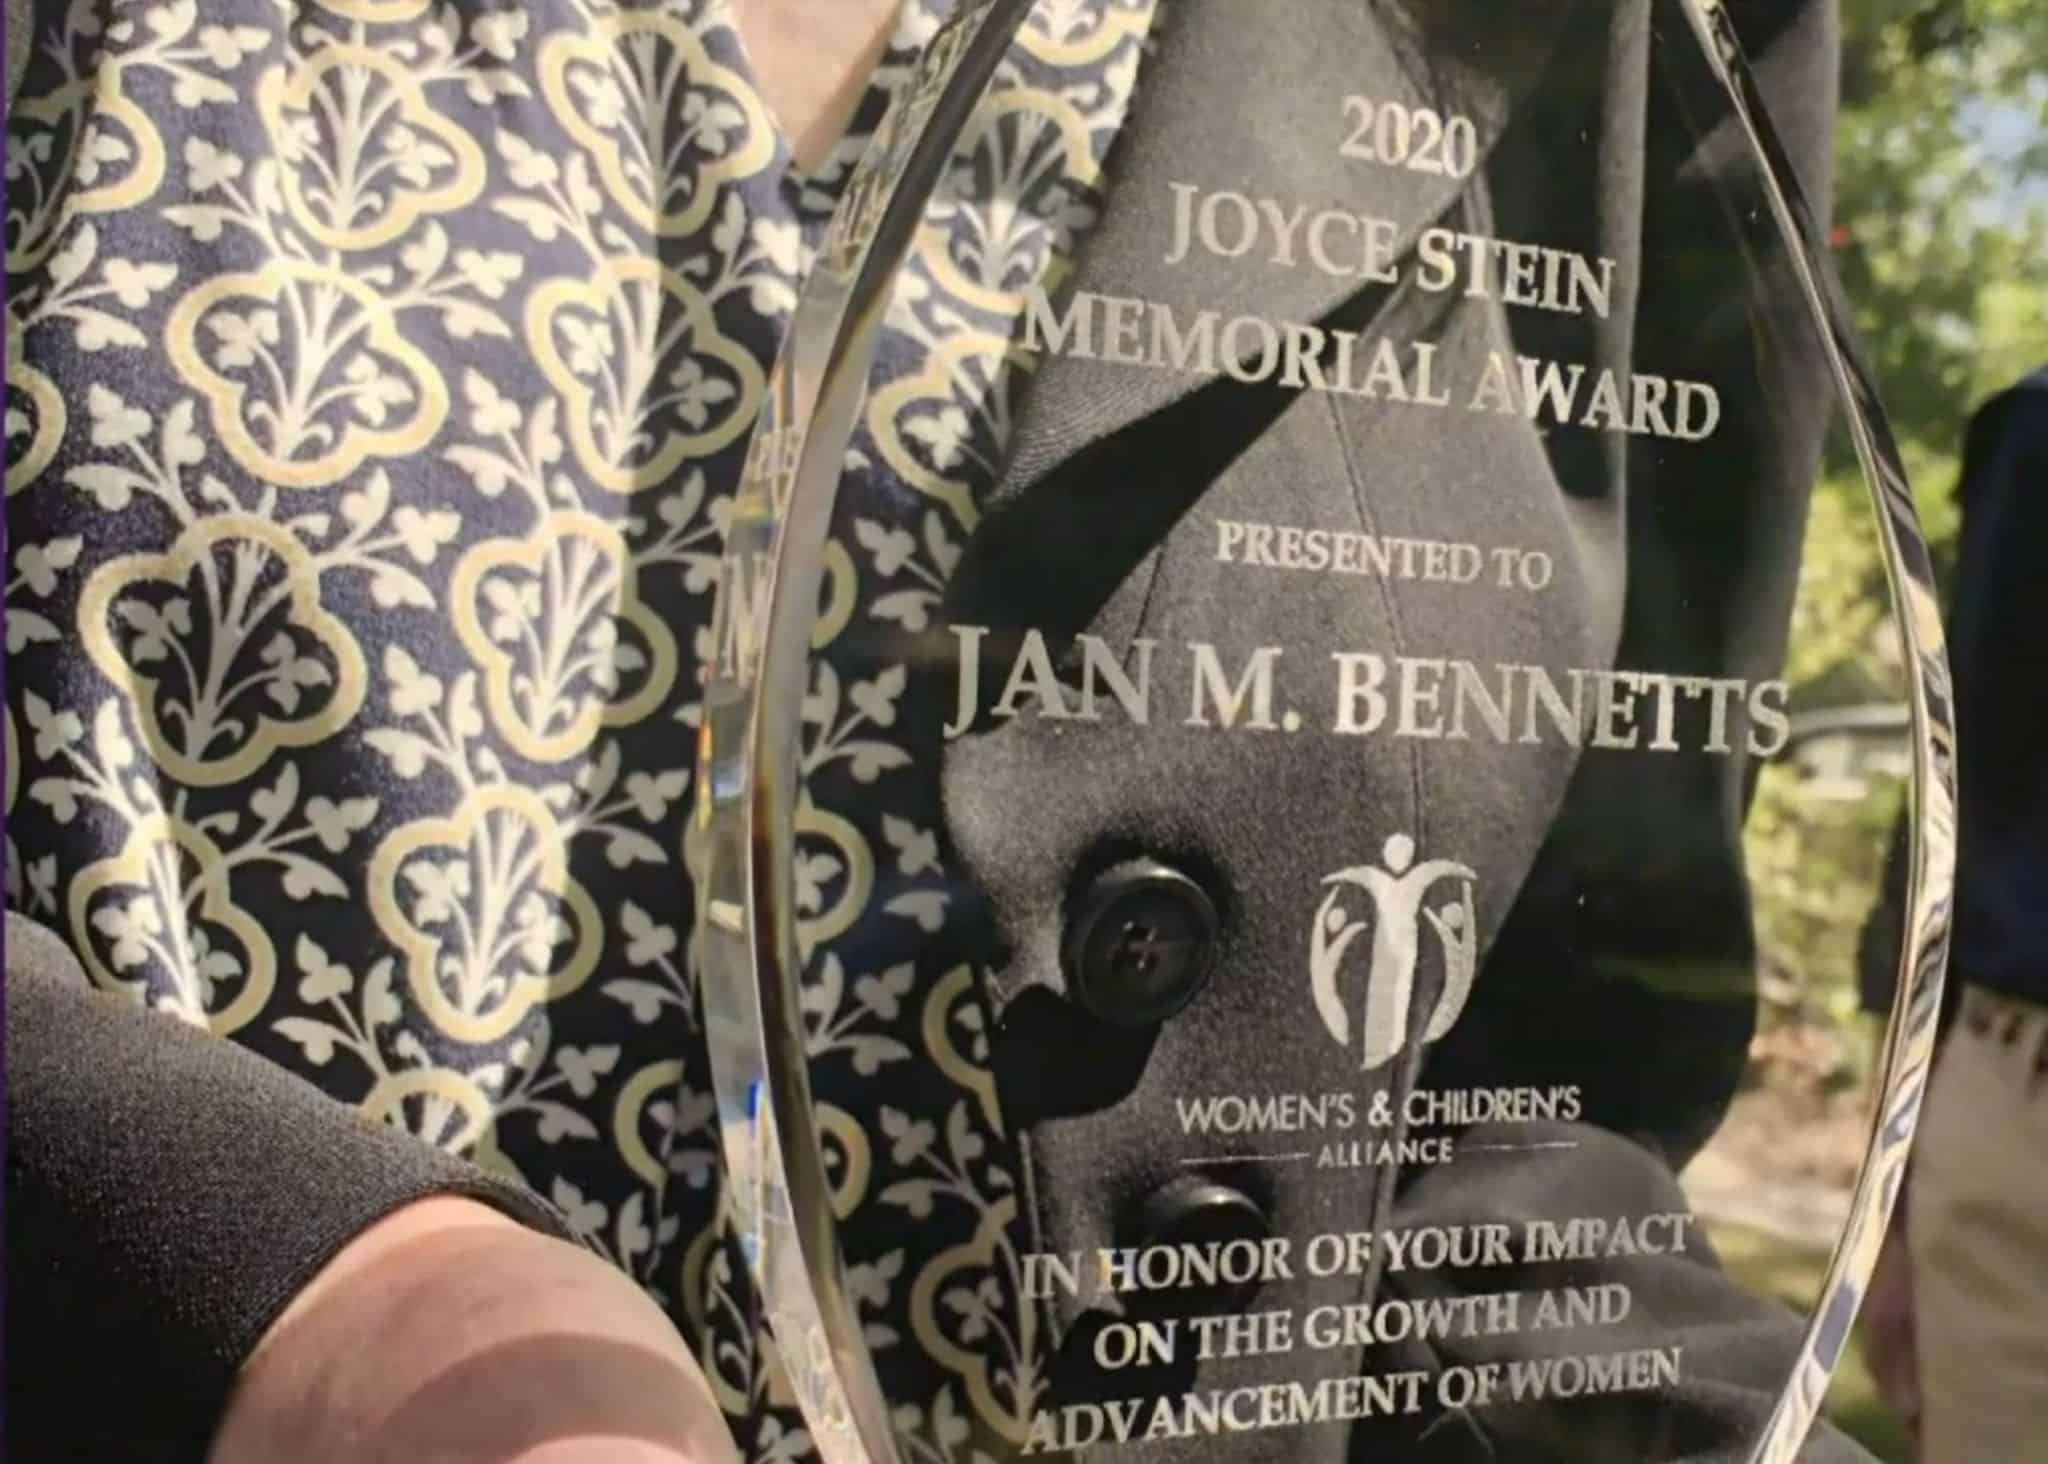 Ada County Prosecutor Jan M. Bennetts is the 2020 recipient of the Joyce Stein Memorial Award.